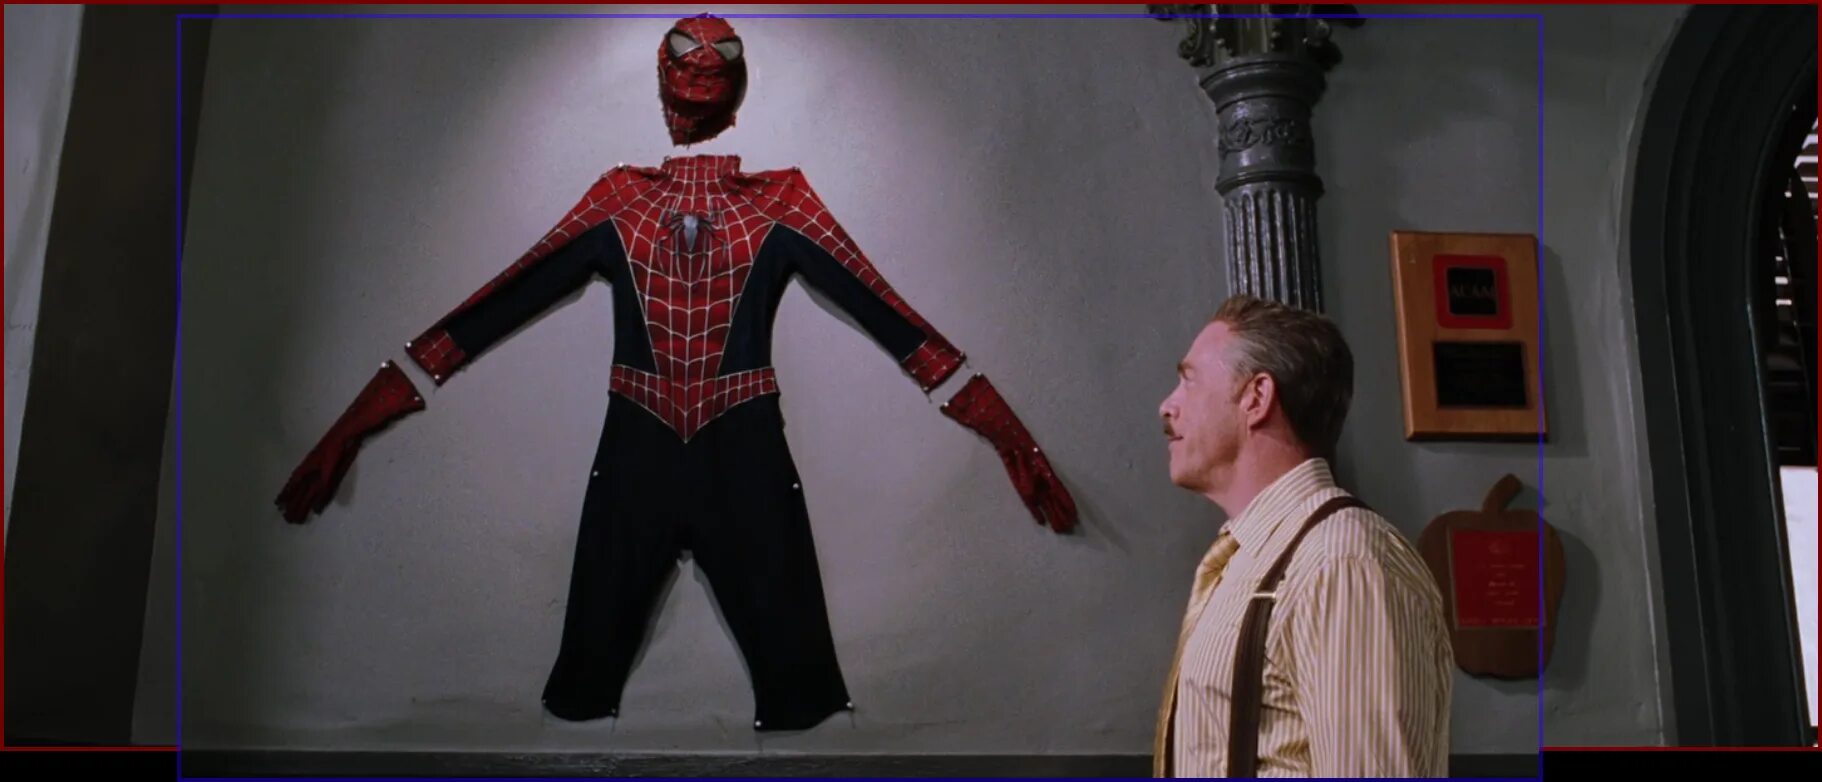 Джон джеймсон человек паук 2. Человек паук Джей Джона джеймсон. Джей Джона джеймсон в костюме человека паука.